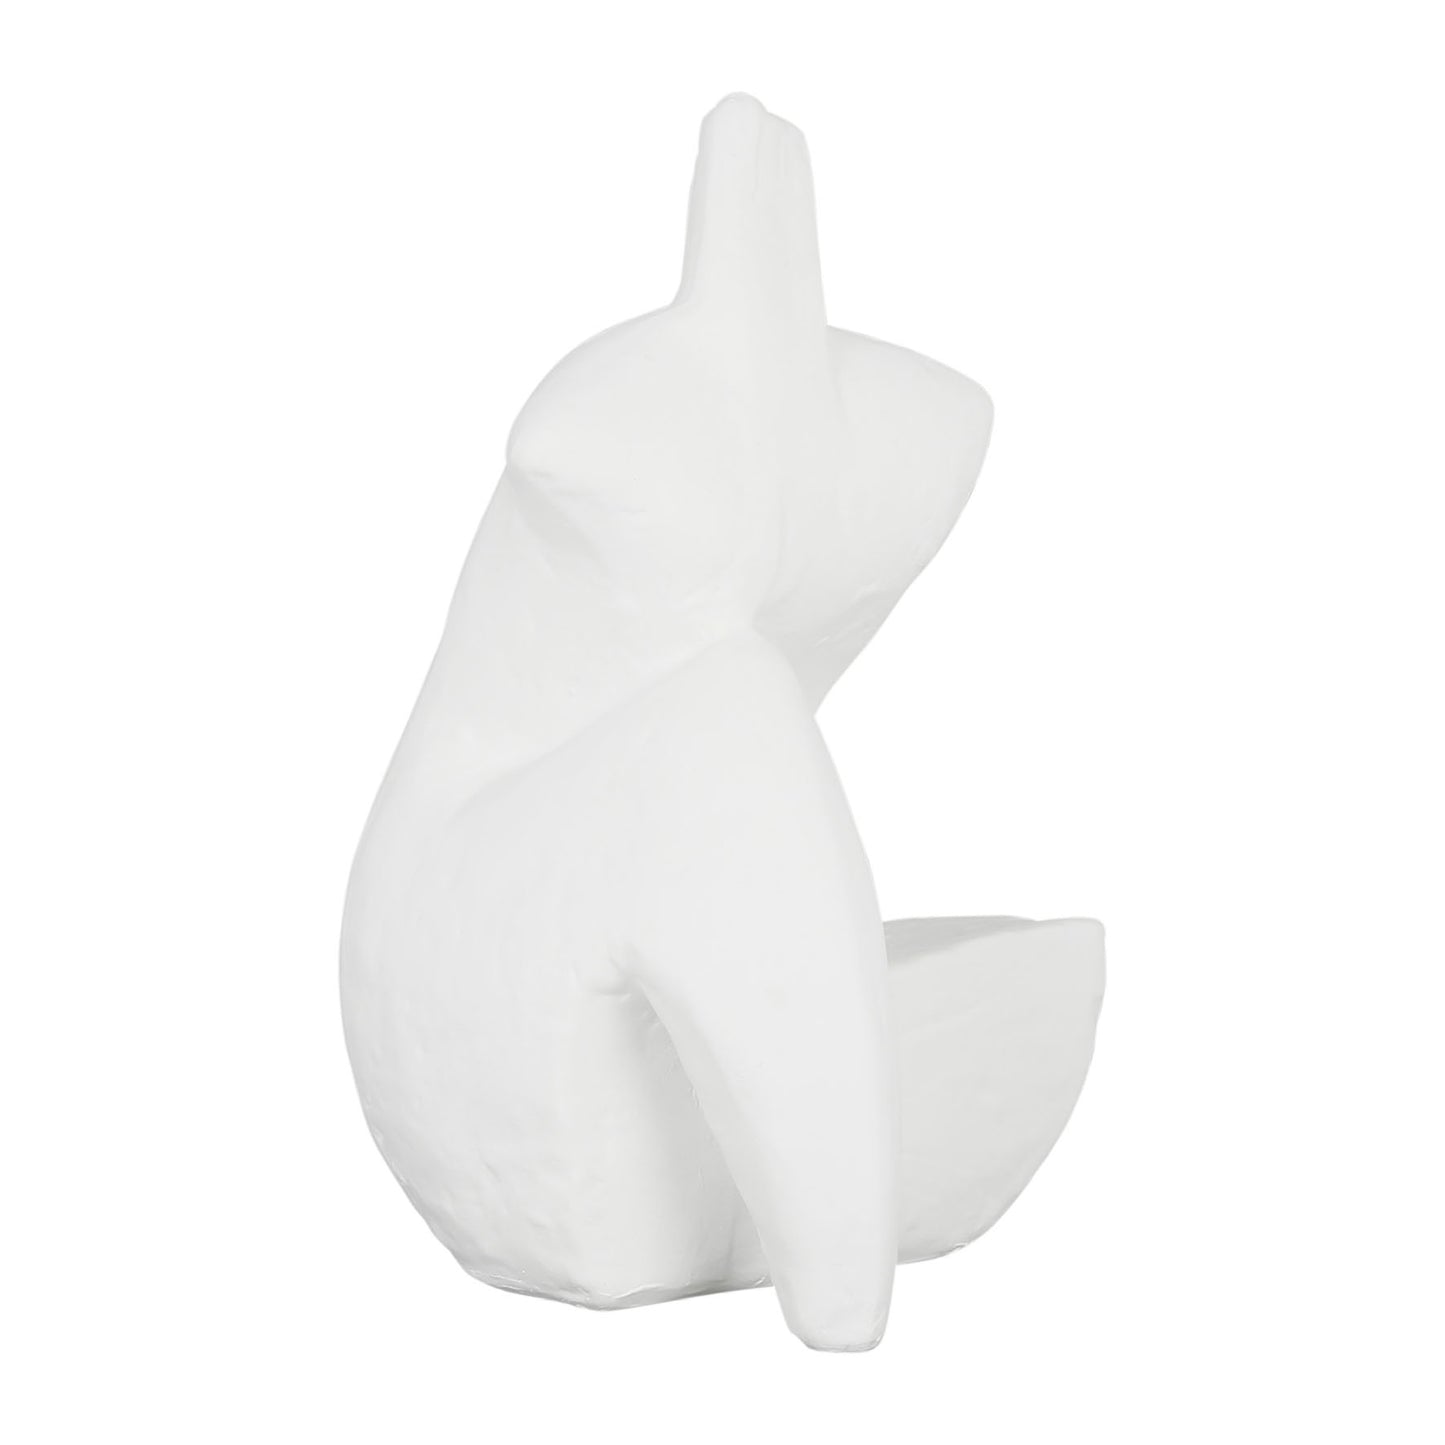 Nymph sitting figurine